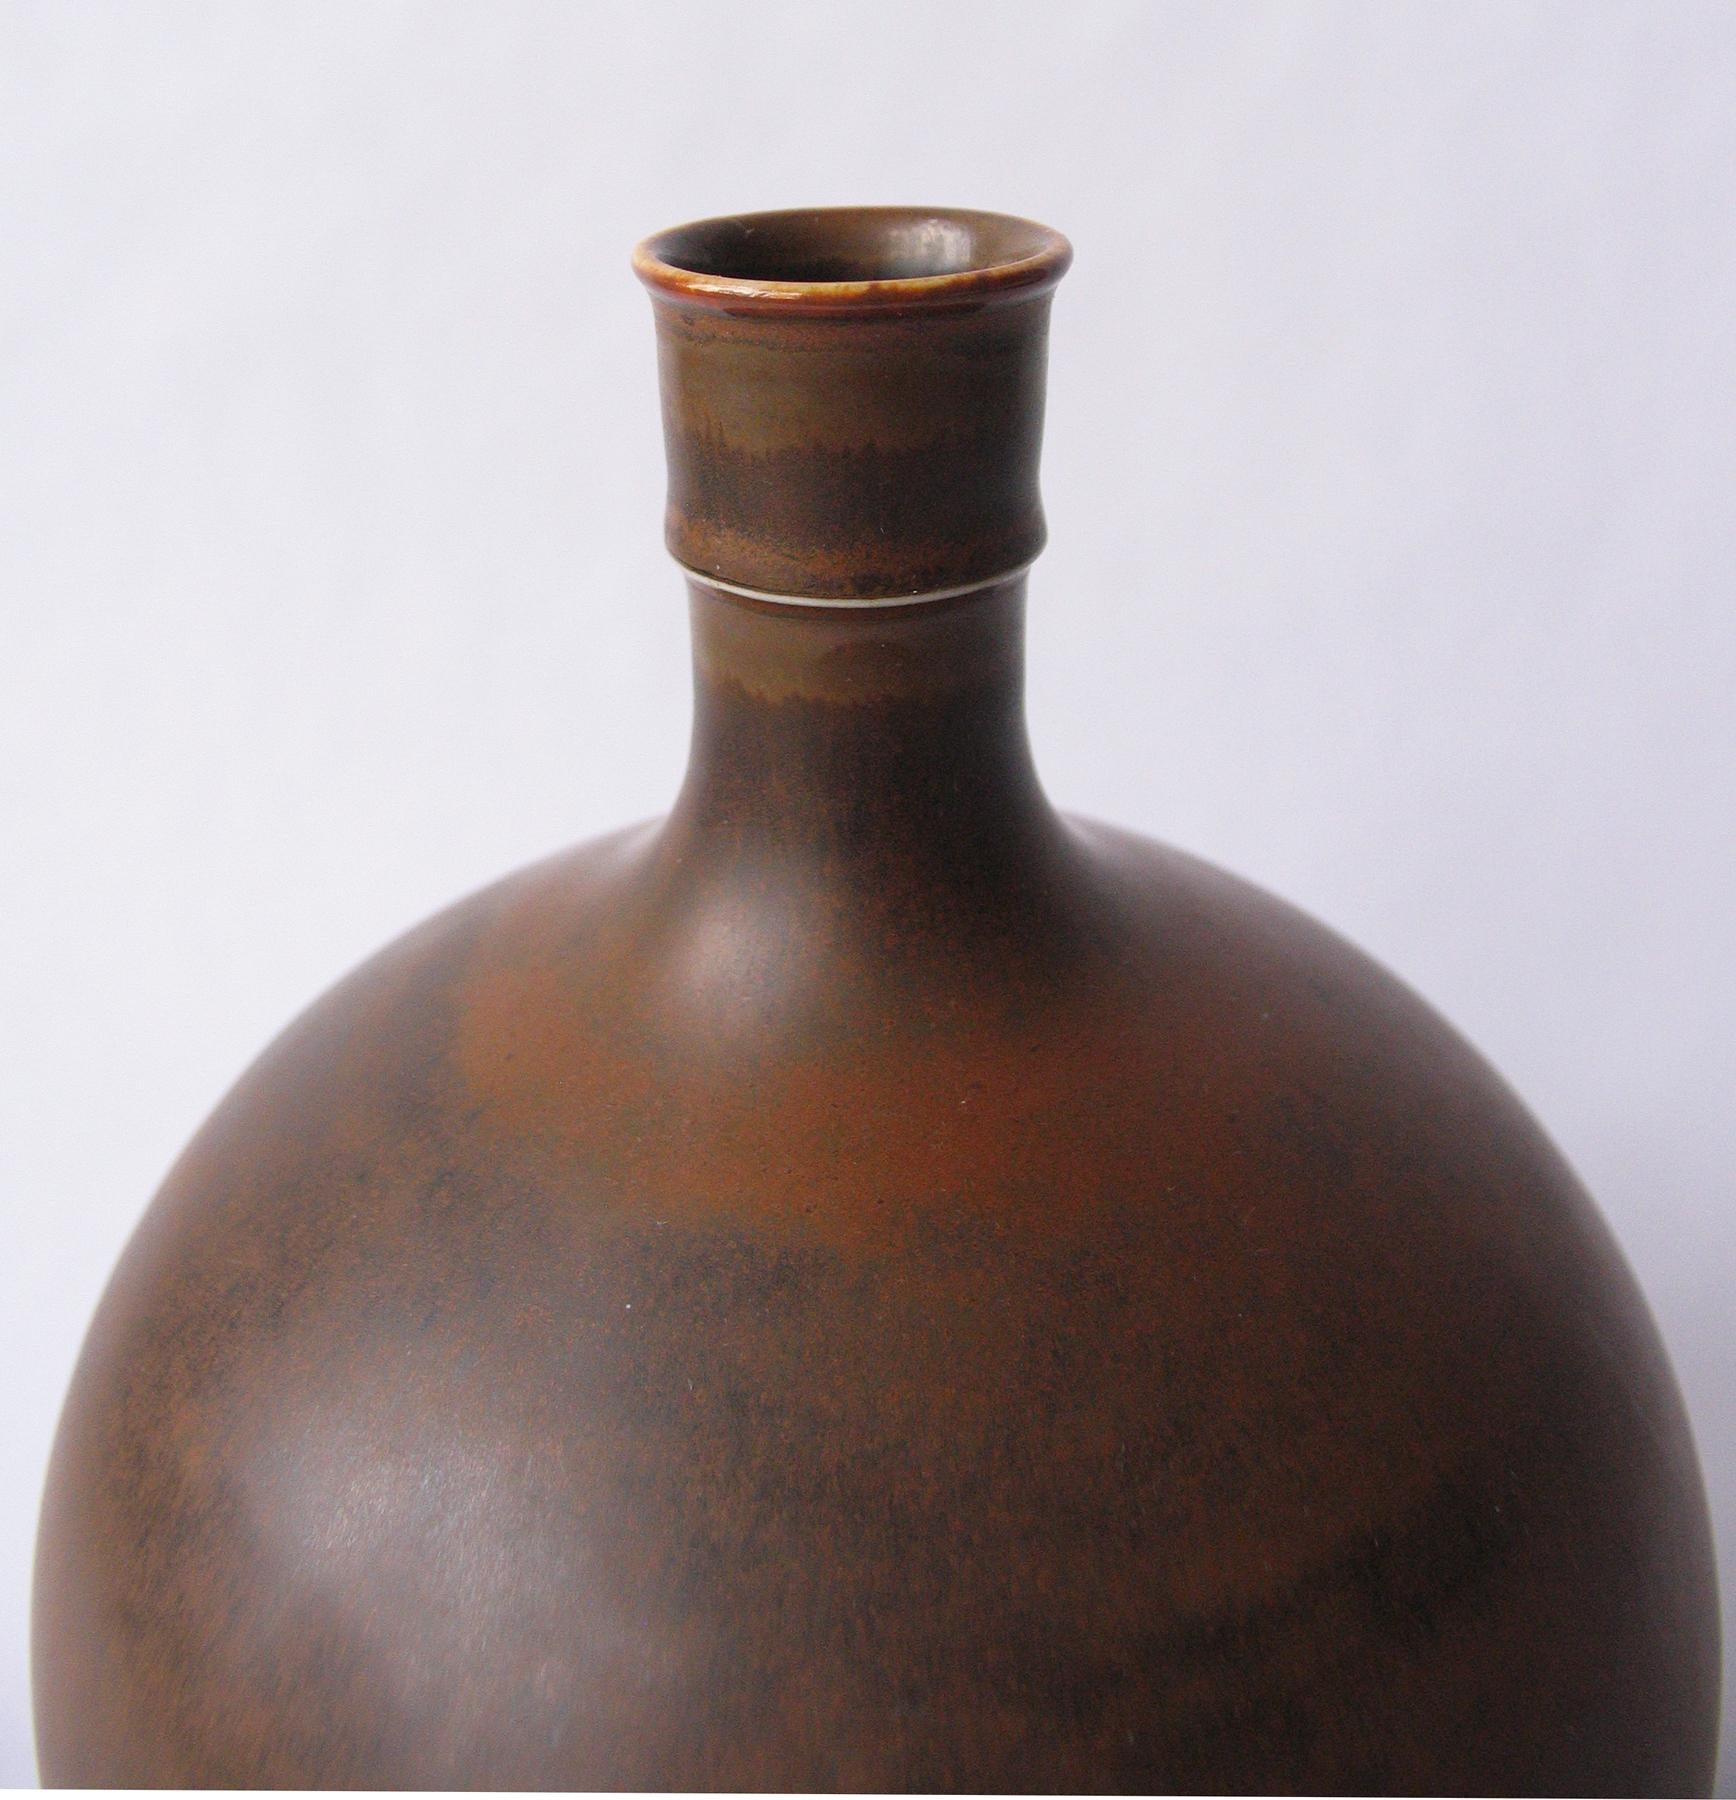 Large elegant stoneware vase by Stig Lindberg for Gustavsberg, Sweden, circa 1950s.
Beautiful brown hairsfur glazed bottle form. Signed on bottom.